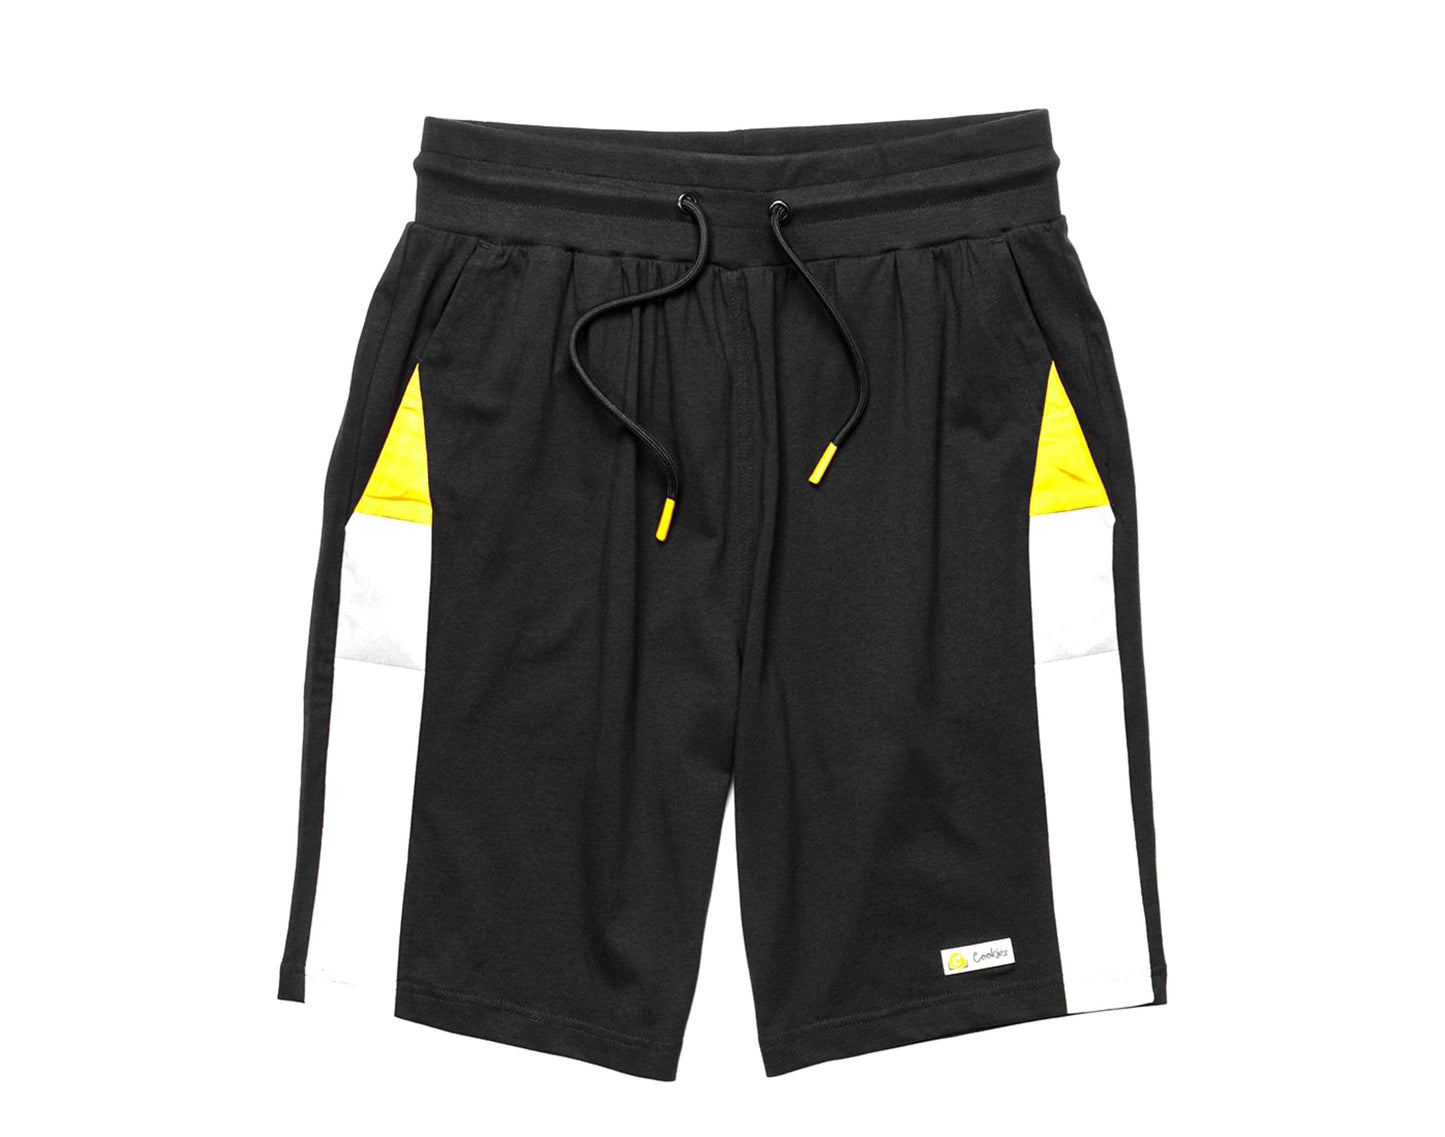 Cookies Montecito Cotton Jersey 3M Knit Black/Yellow Men's Shorts 1540B3641-BLK